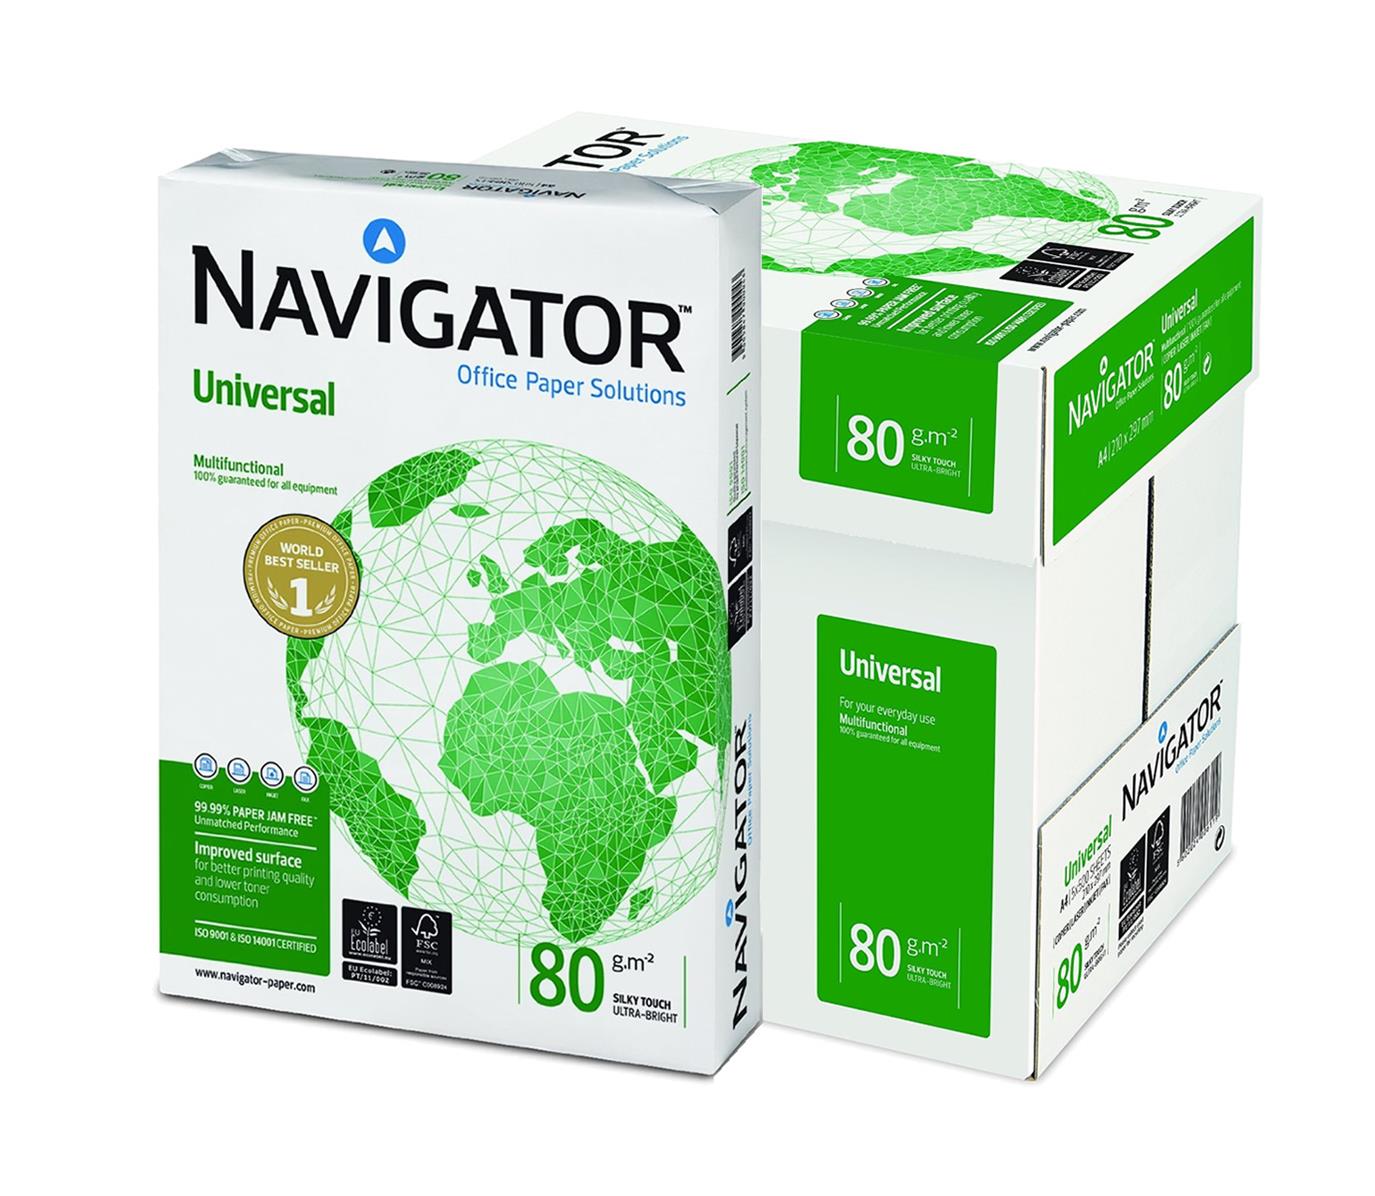 Navigator Papel A4 80gr. 210x297mm (500 Hojas) Blanco